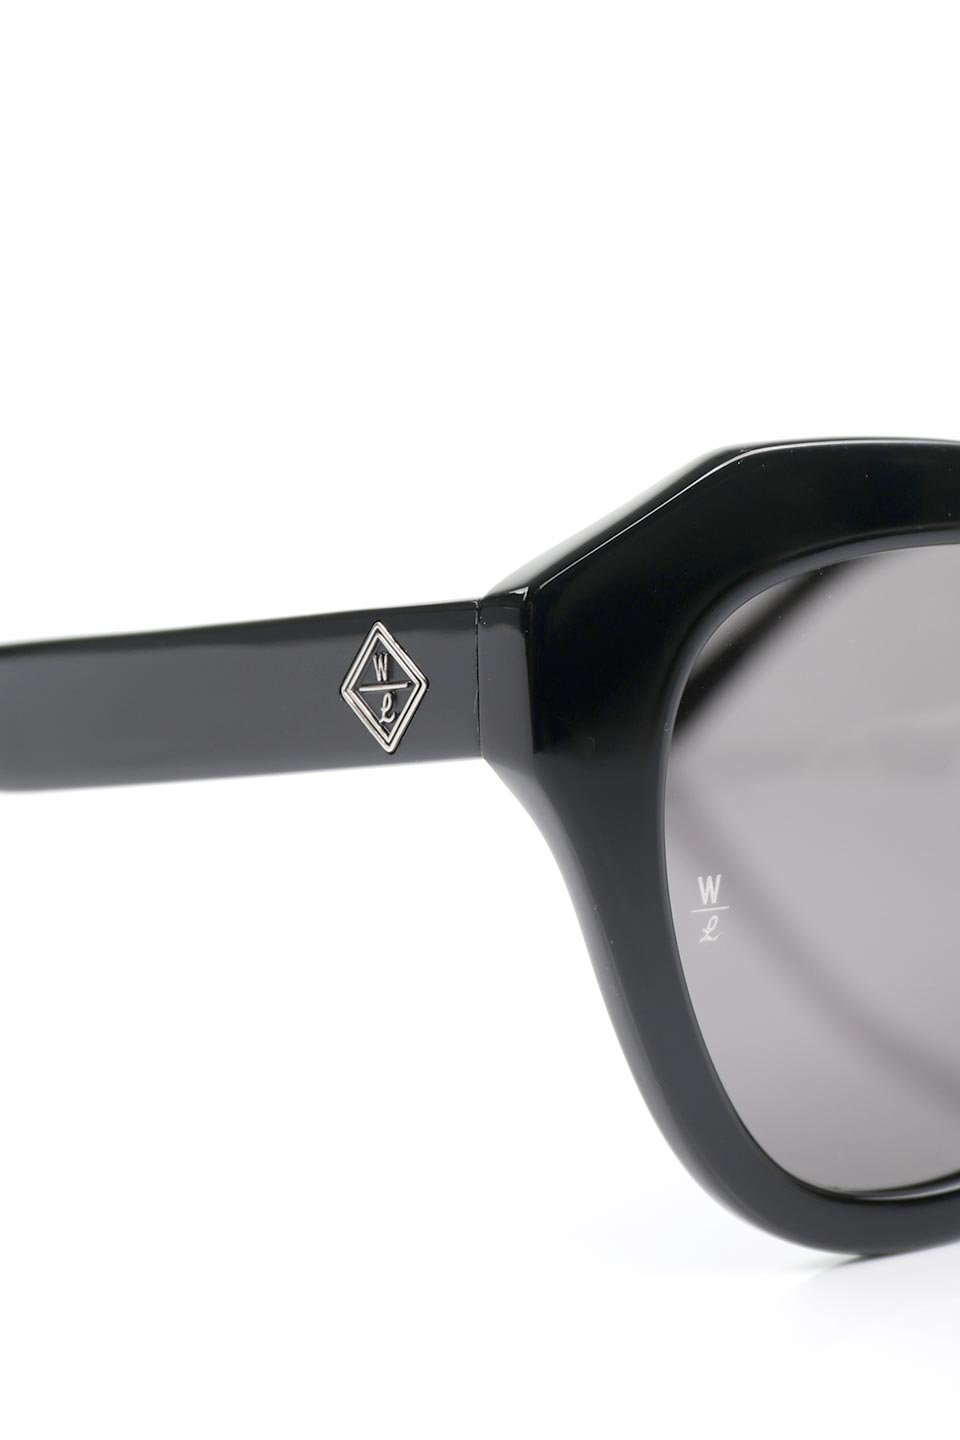 WONDERLANDのCALEXICO(01-GlossBlack/GrayLens)カレキシコ・セルフレーム・サングラス/WONDERLANDのメガネ・サングラスや。女性向けモデル”CALEXICO（カレキシコ）